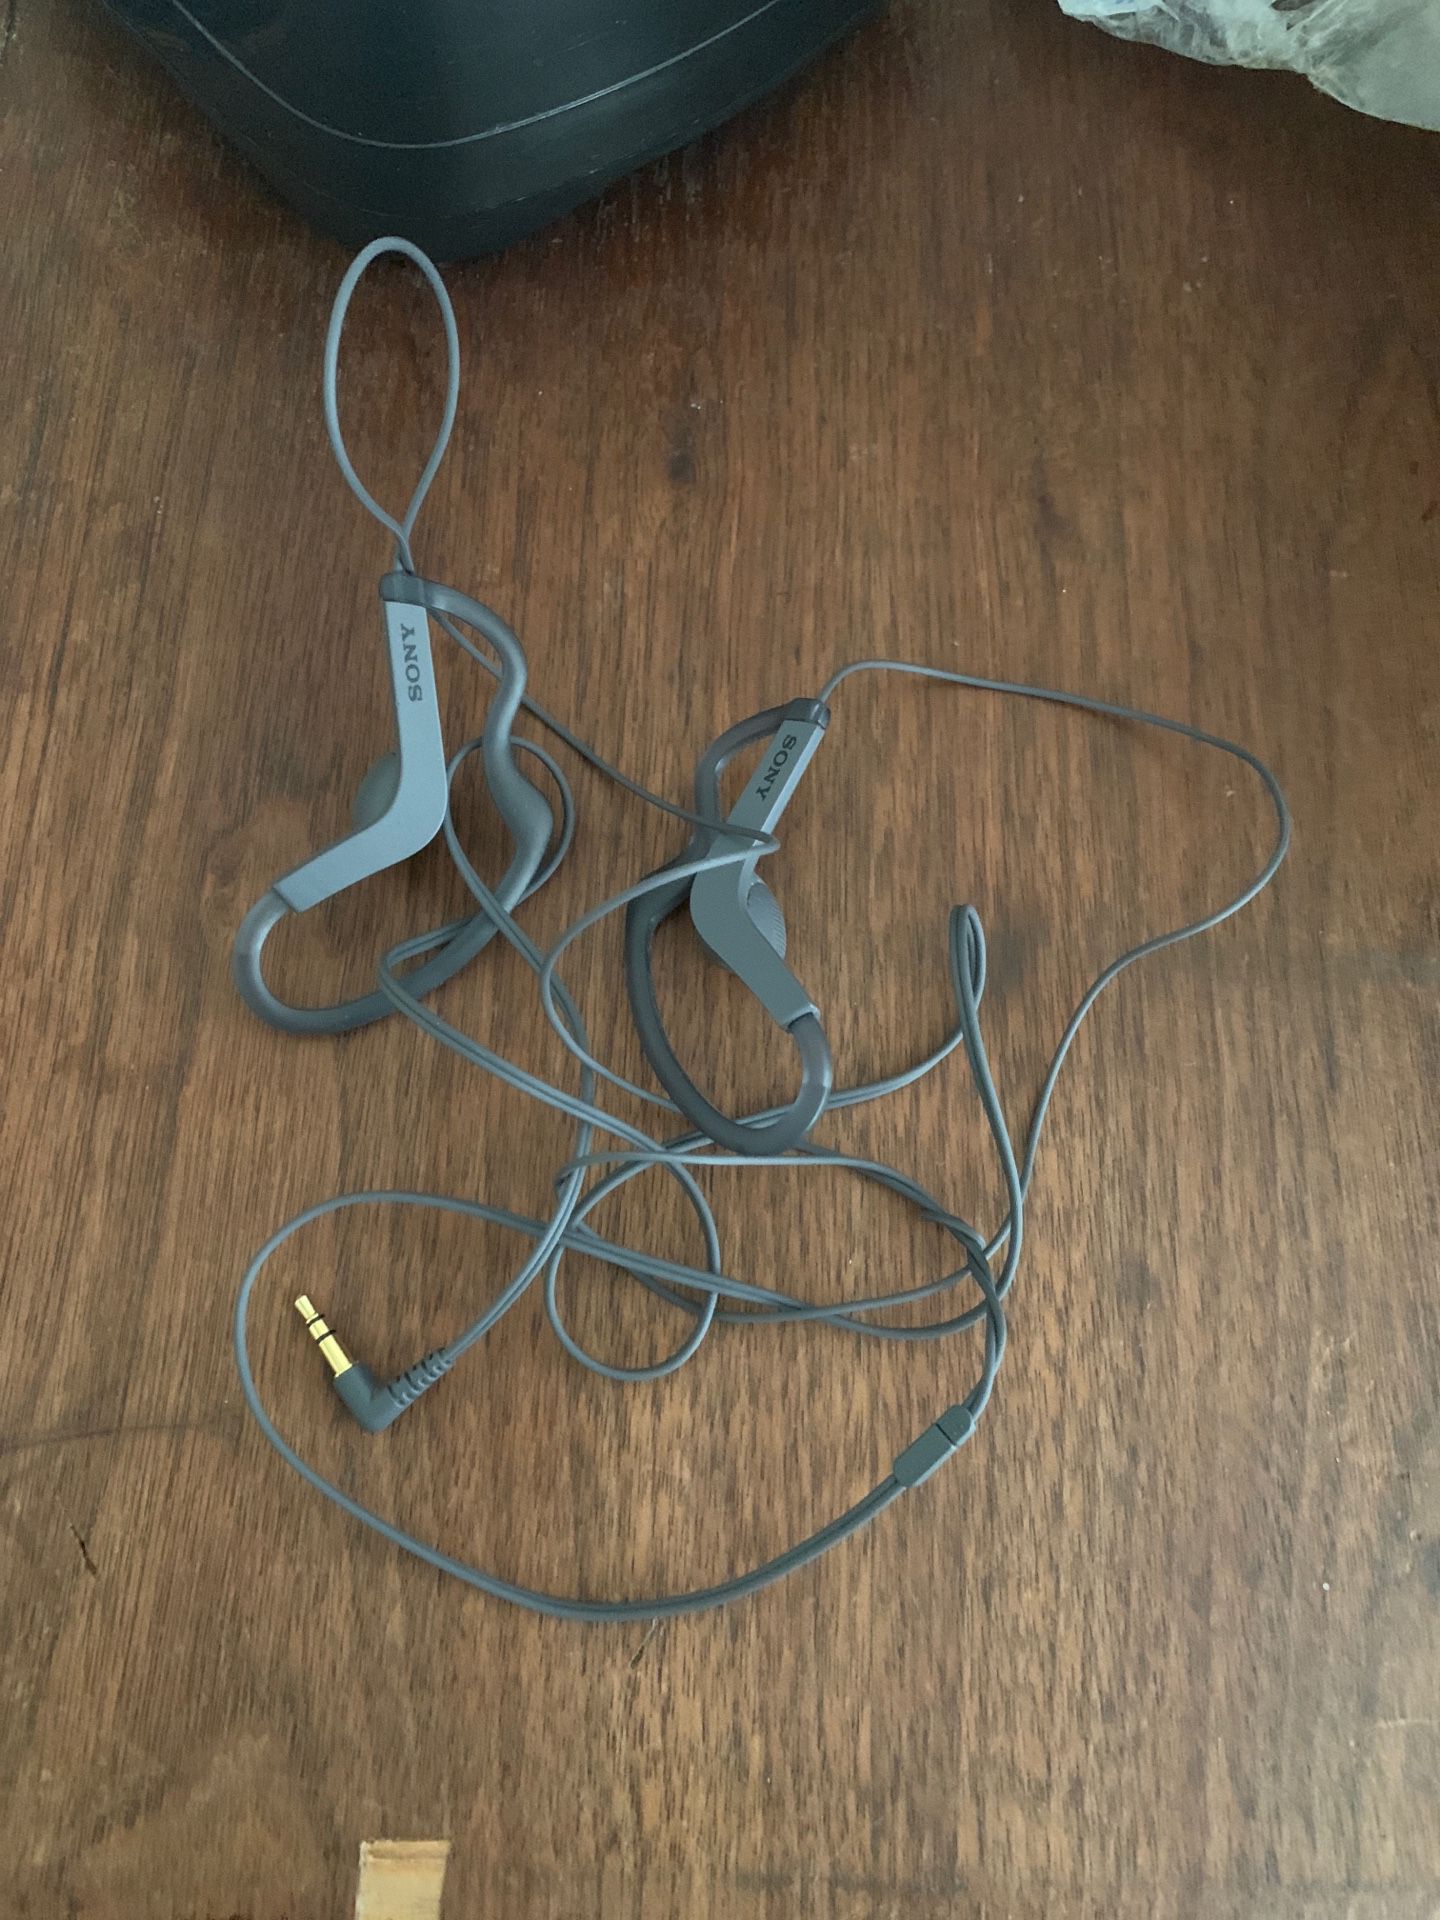 Sony headphones with ear bud rings